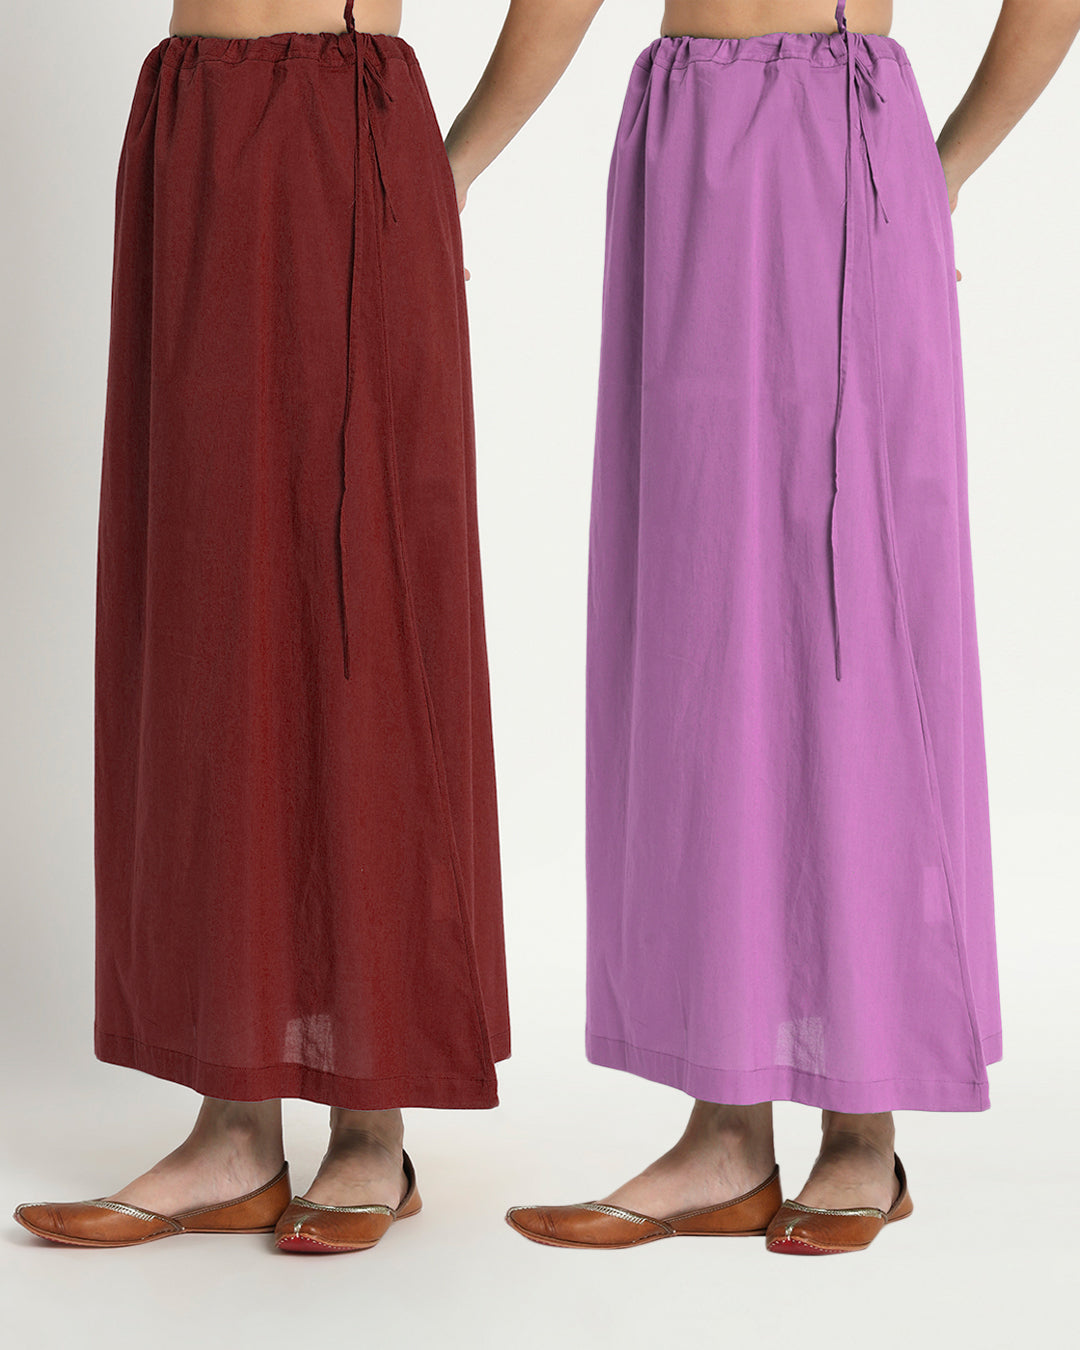 Combo: Russet Red & Wisteria Purple Peekaboo Petticoat- Set of 2